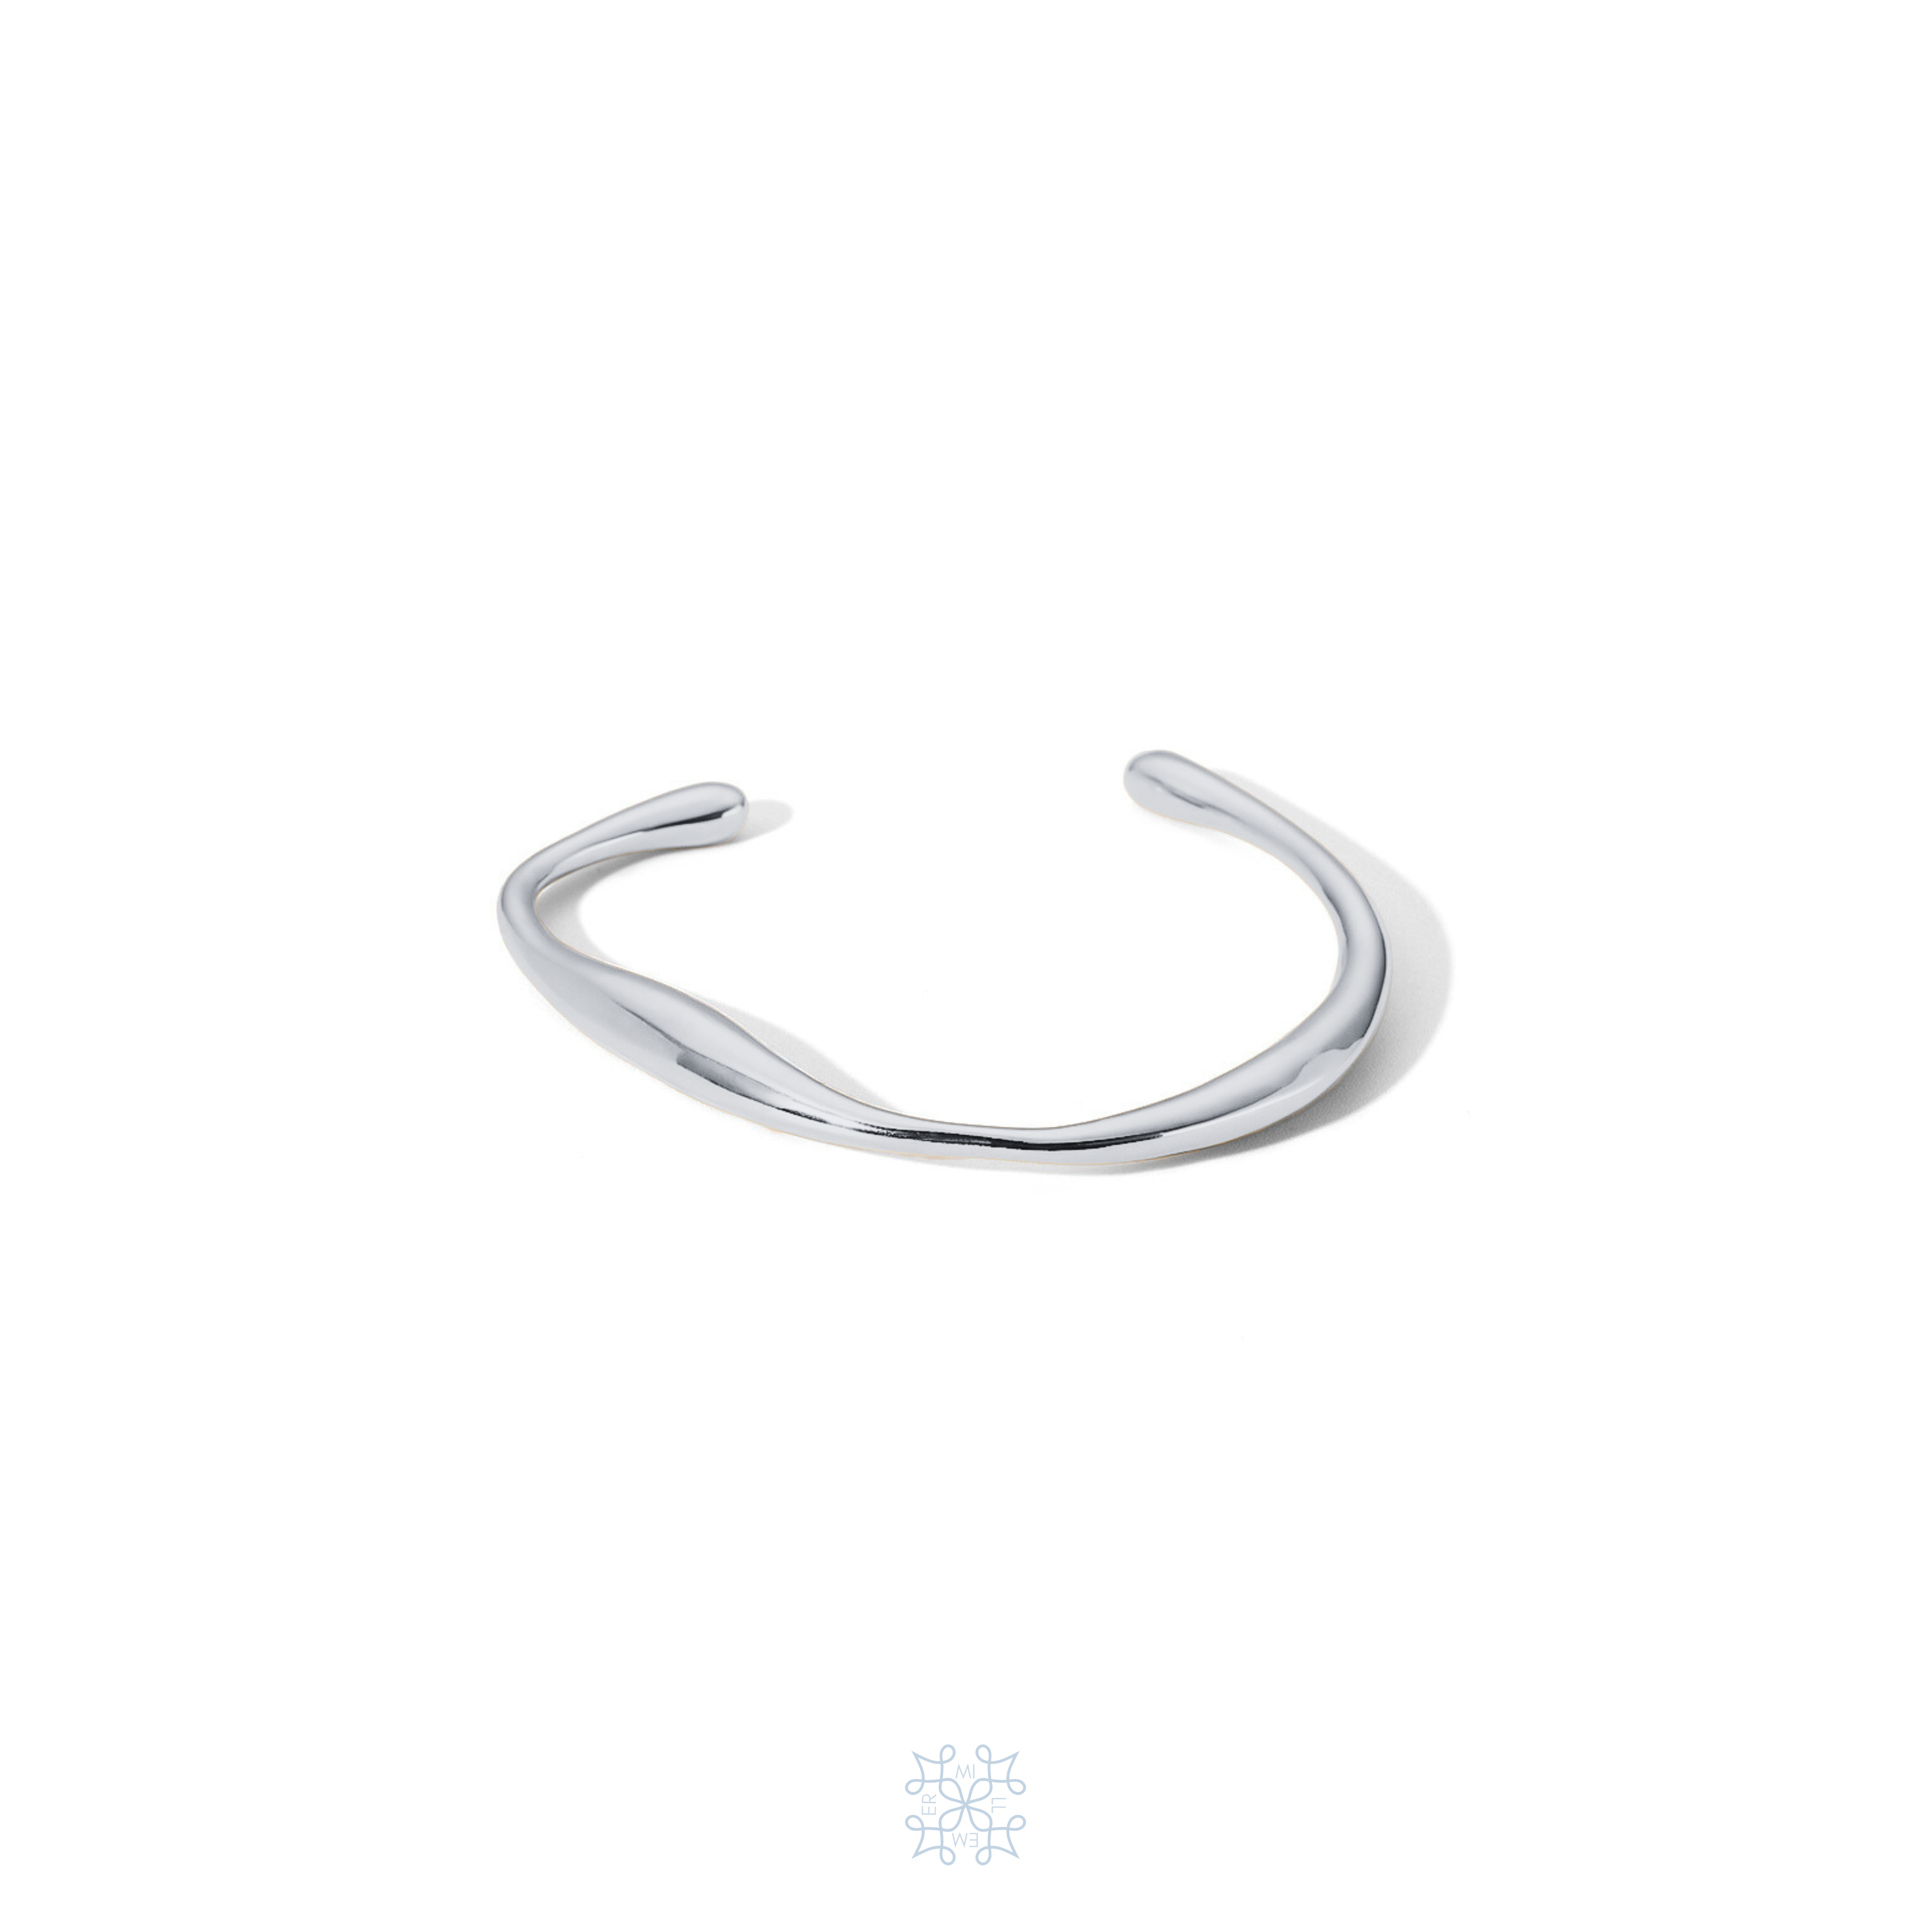 Ray silver cuff bracelet. Irregular shape. shiny silver surface.